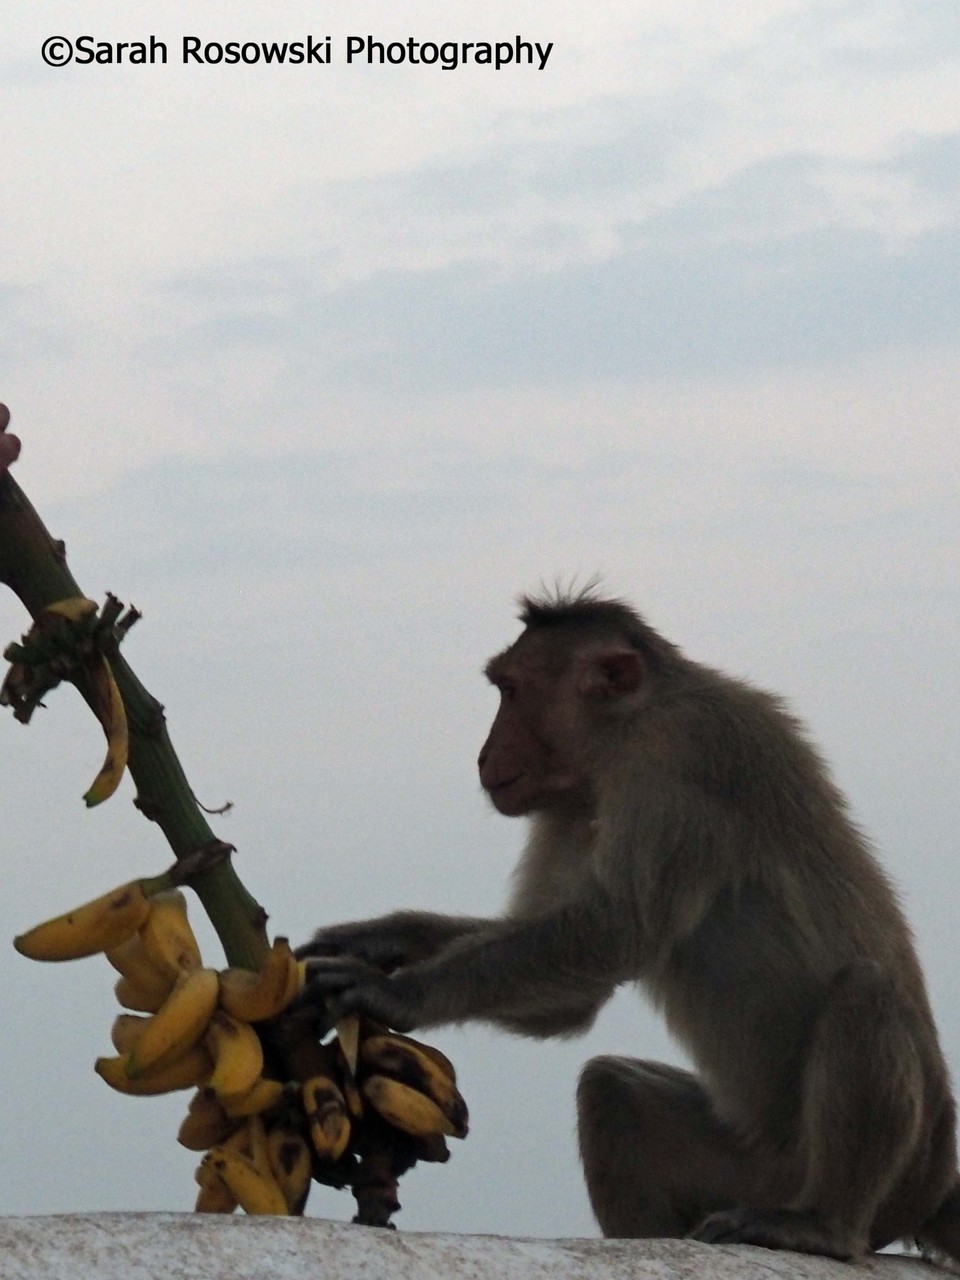 And monkeys do love bananas.....